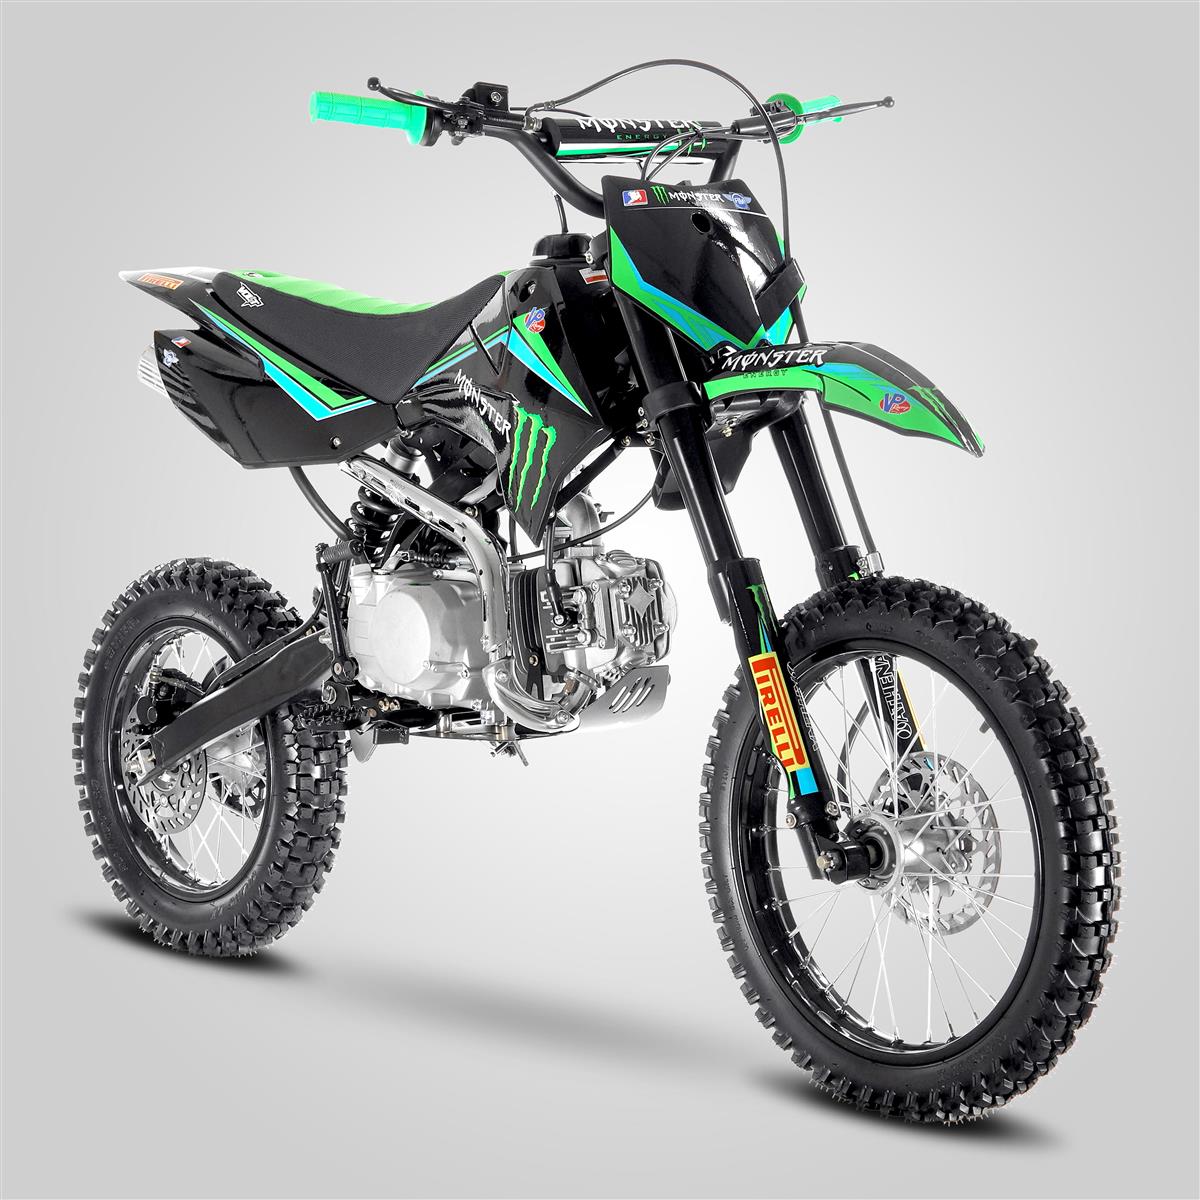 Dirt Bike SX 125cc 14"/17" Monster Energy - Small MX | Smallmx - Dirt bike,  Pit bike, Quads, Minimoto